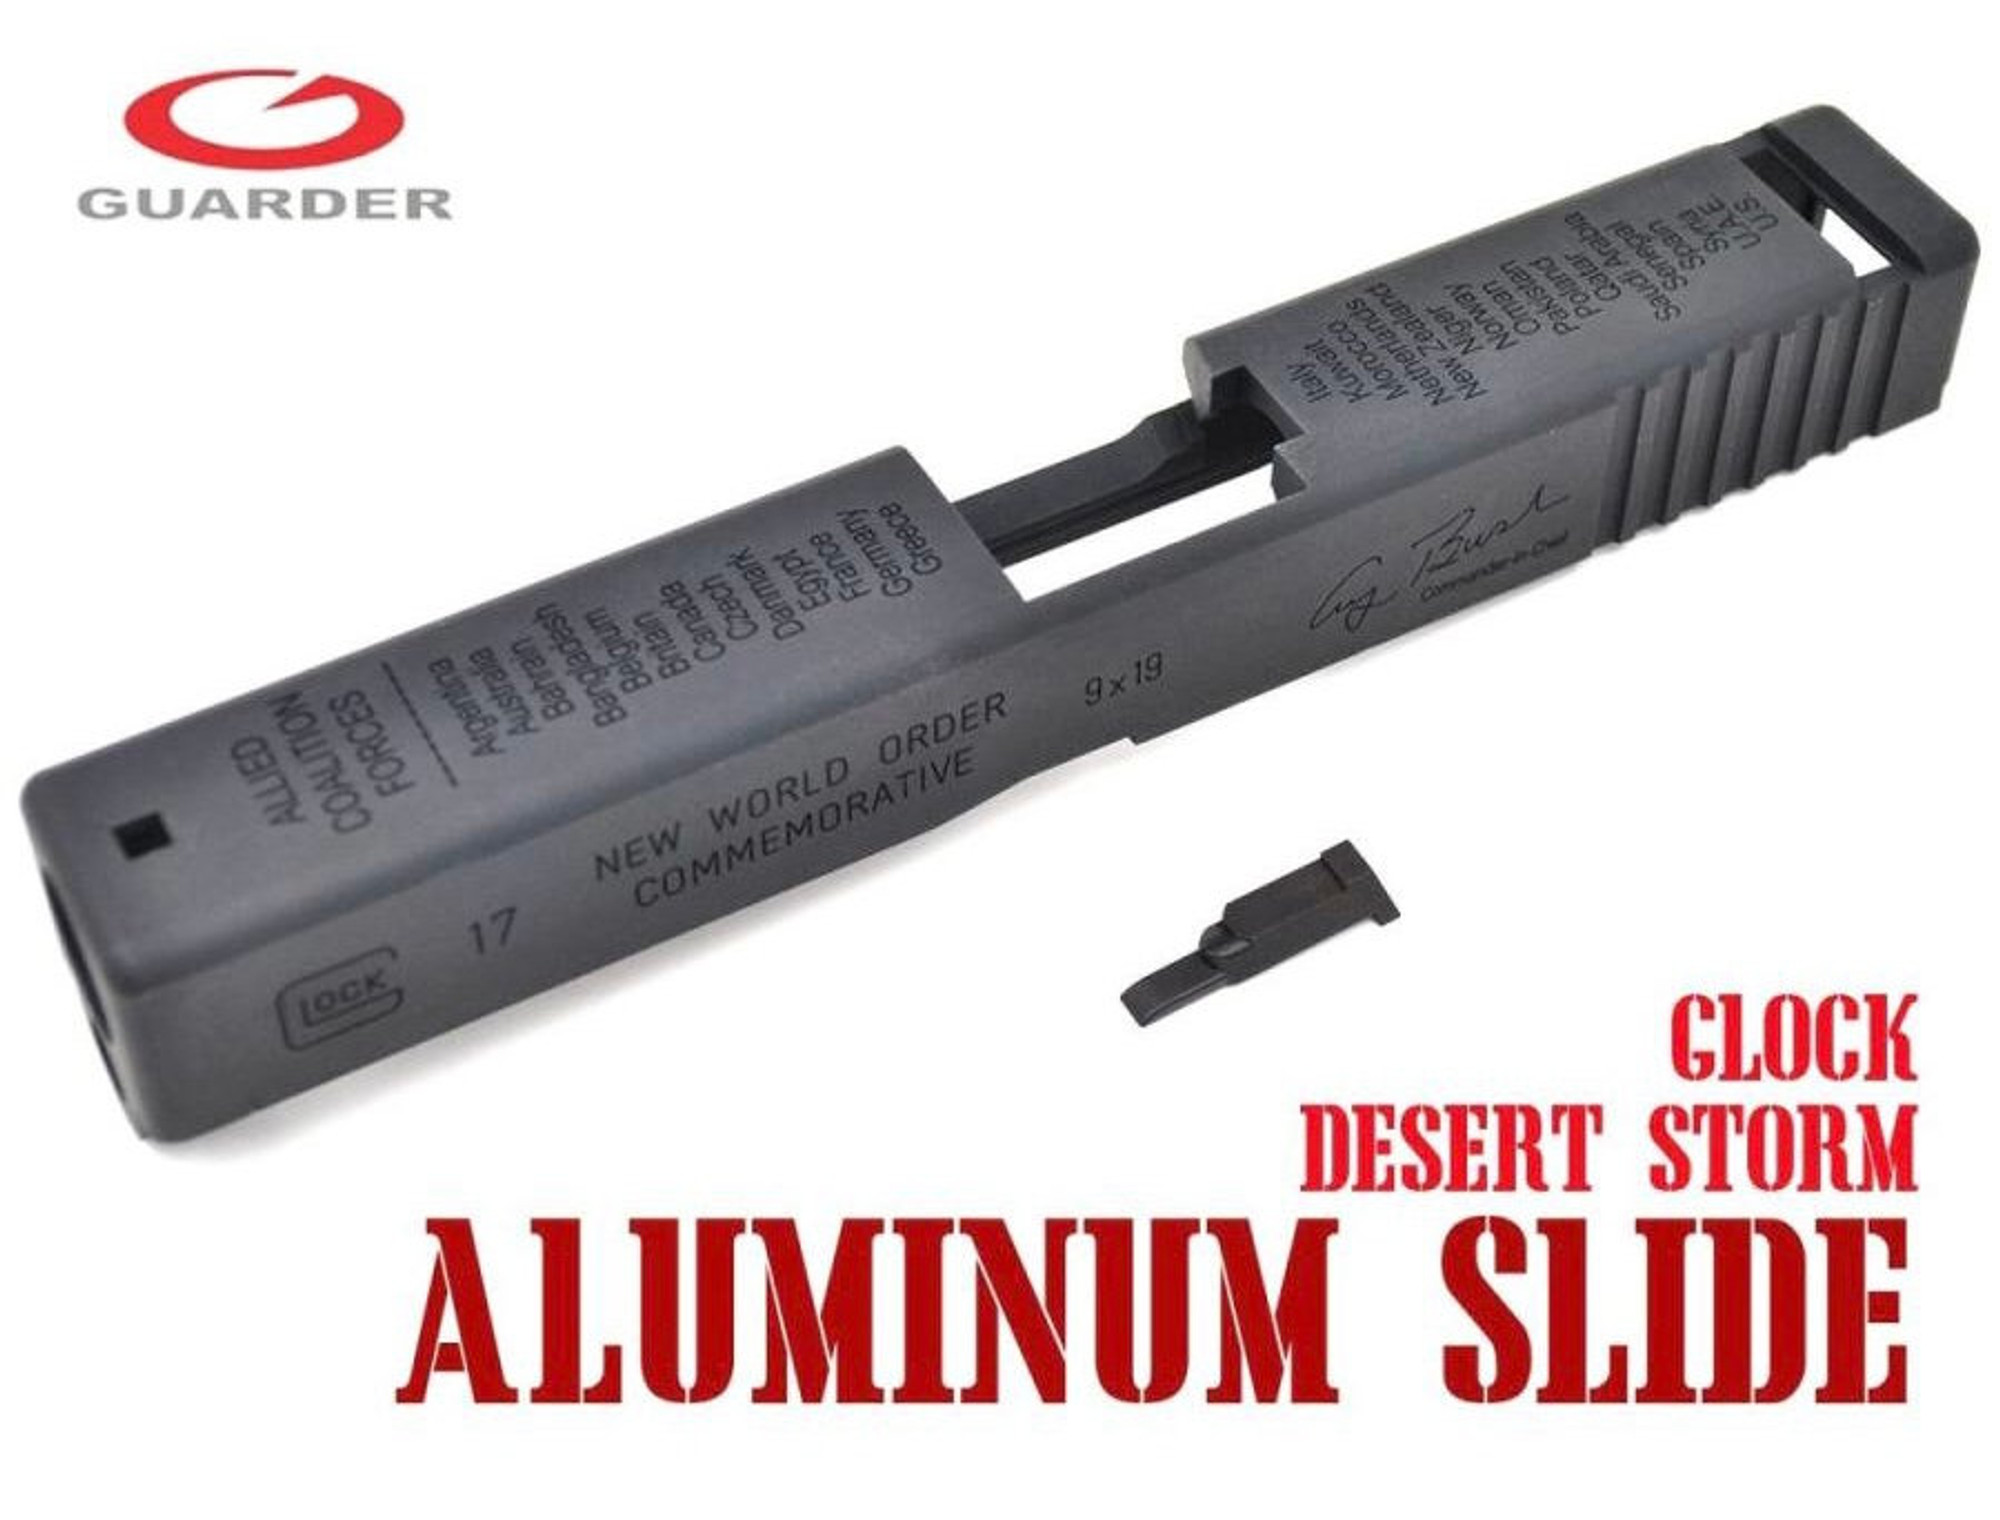 Guarder Desert Storm Aluminum Slide for TM Compatible Glock 17 Gen 3